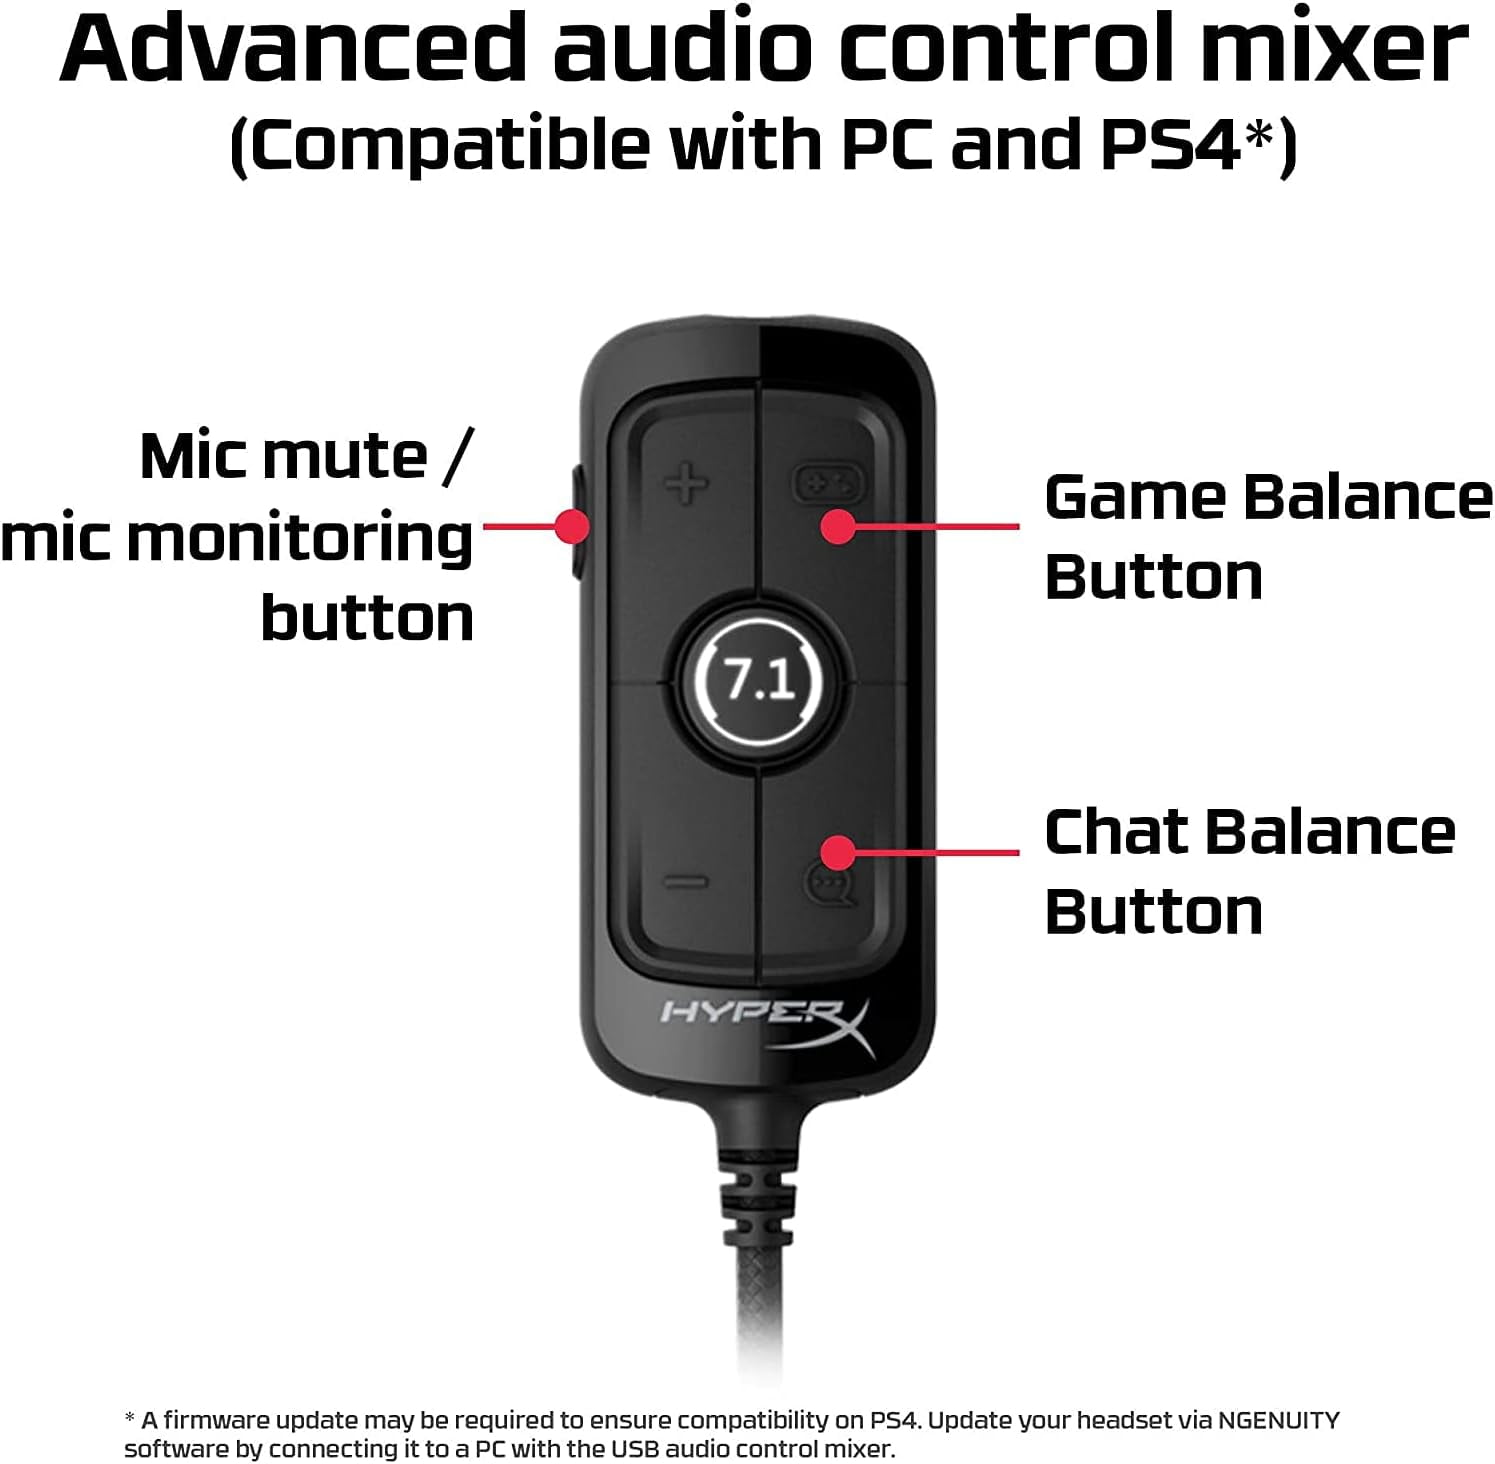 Refurbished: HyperX Cloud Alpha Wired Over-Ear Gaming Headset, Black  (4P5K7AA) 